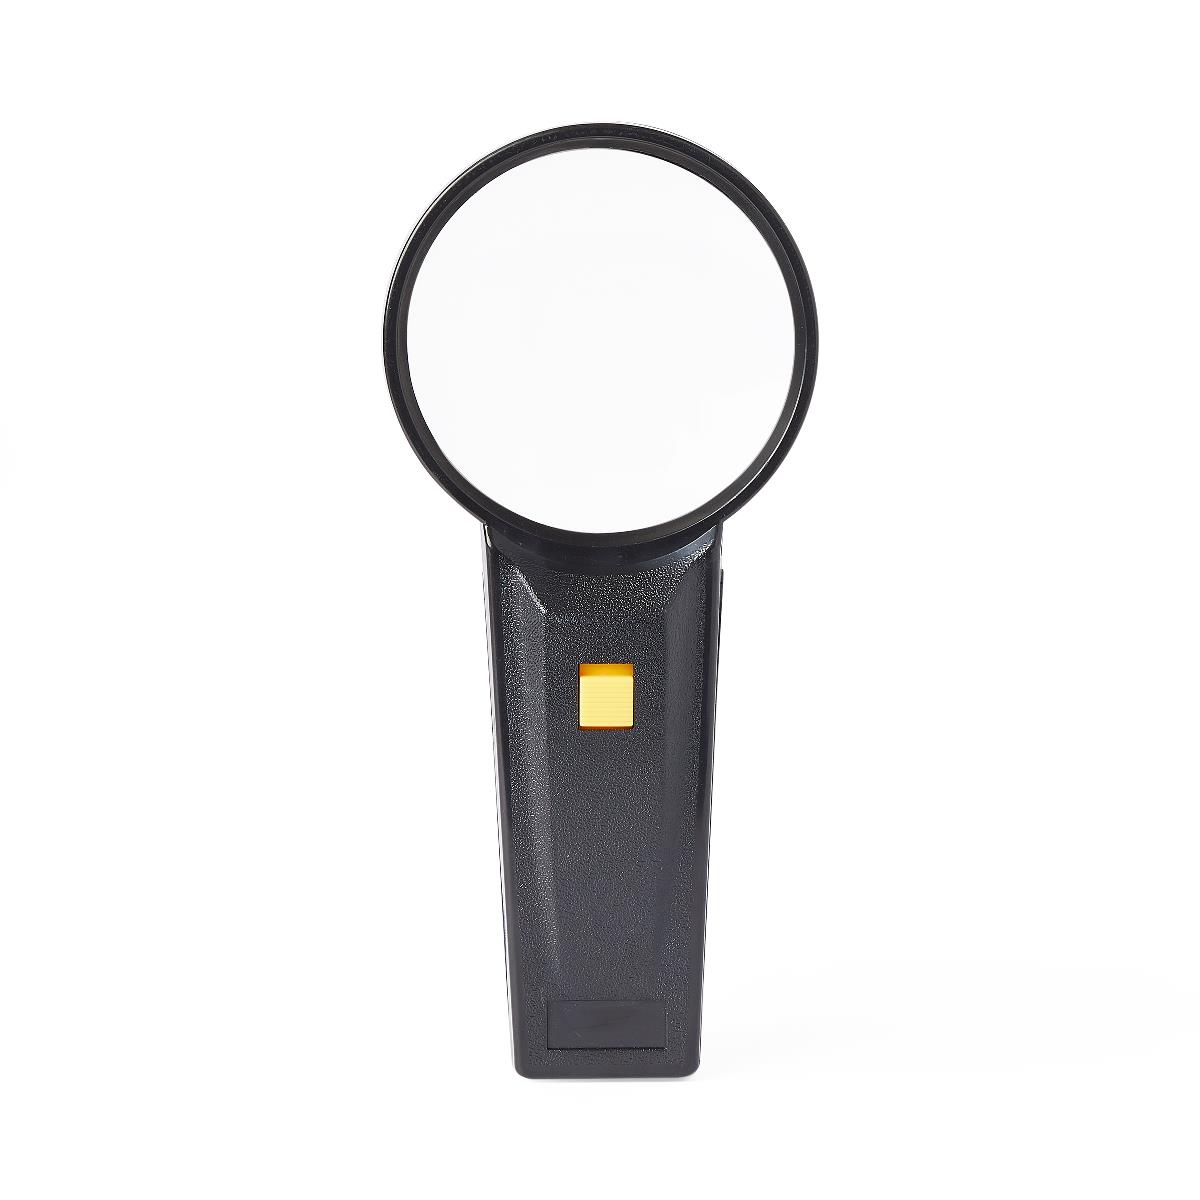 Medline Illuminated Bifocal Magnifier MDSILLMAG